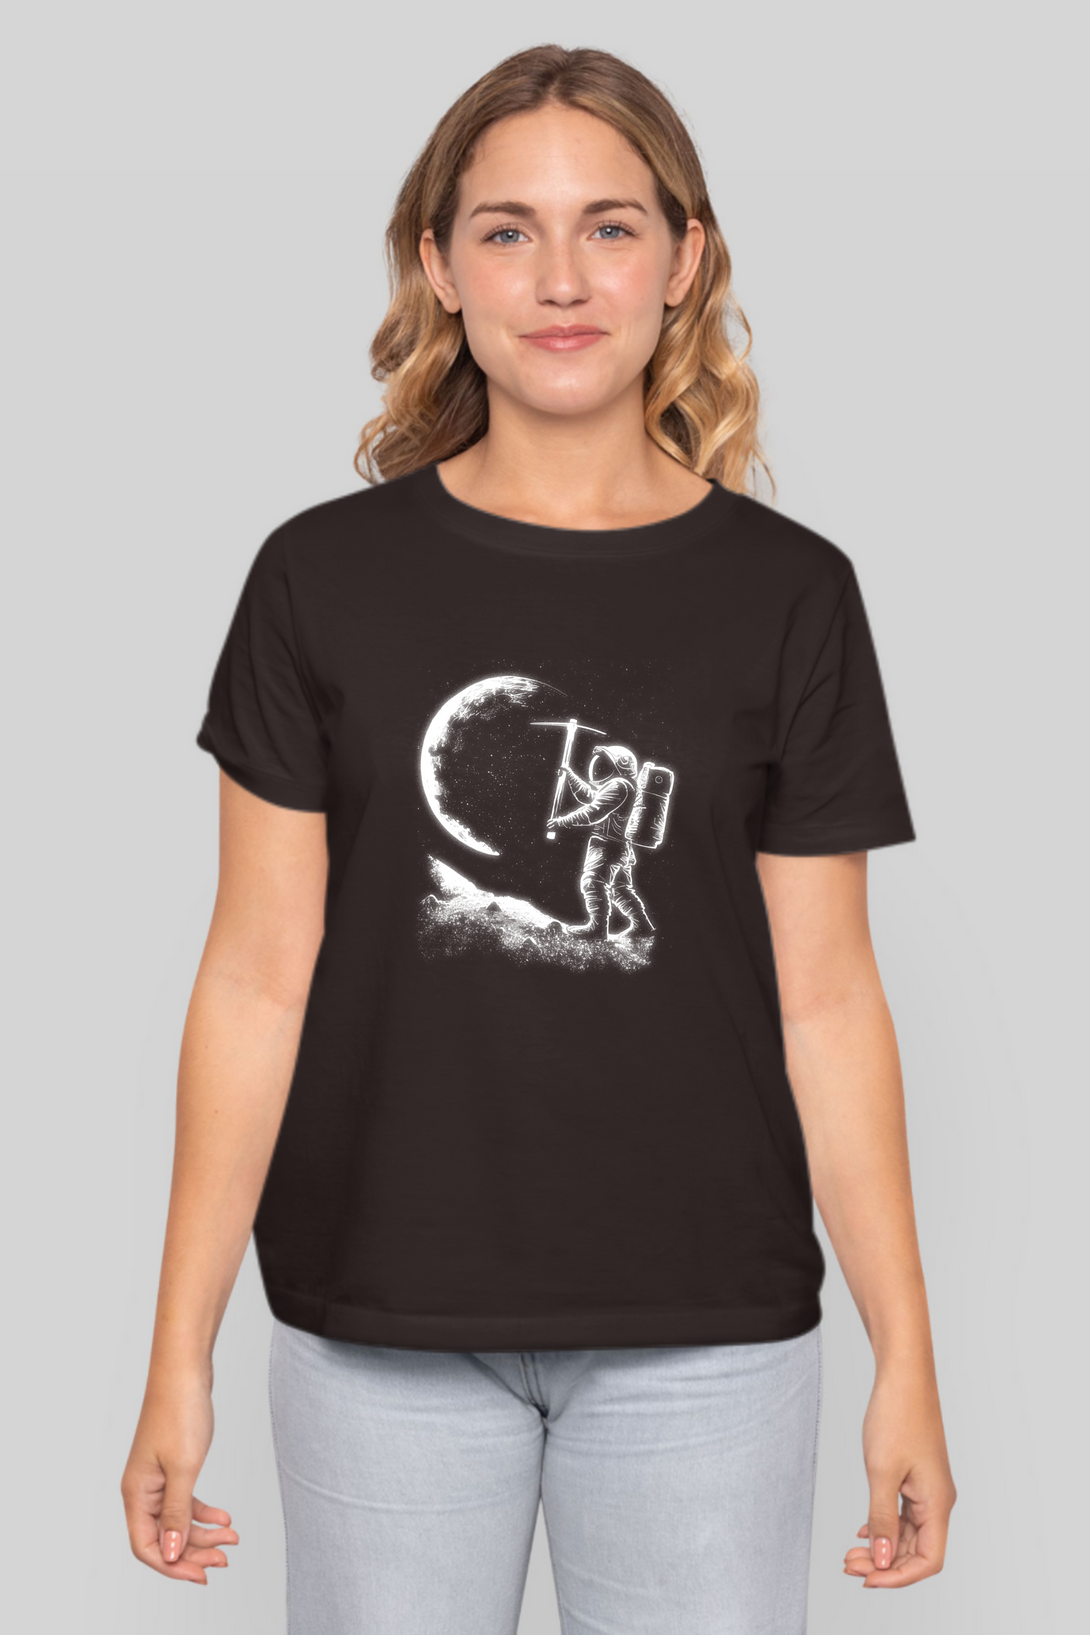 Astro-Lunar Printed T-Shirt For Women - WowWaves - 8